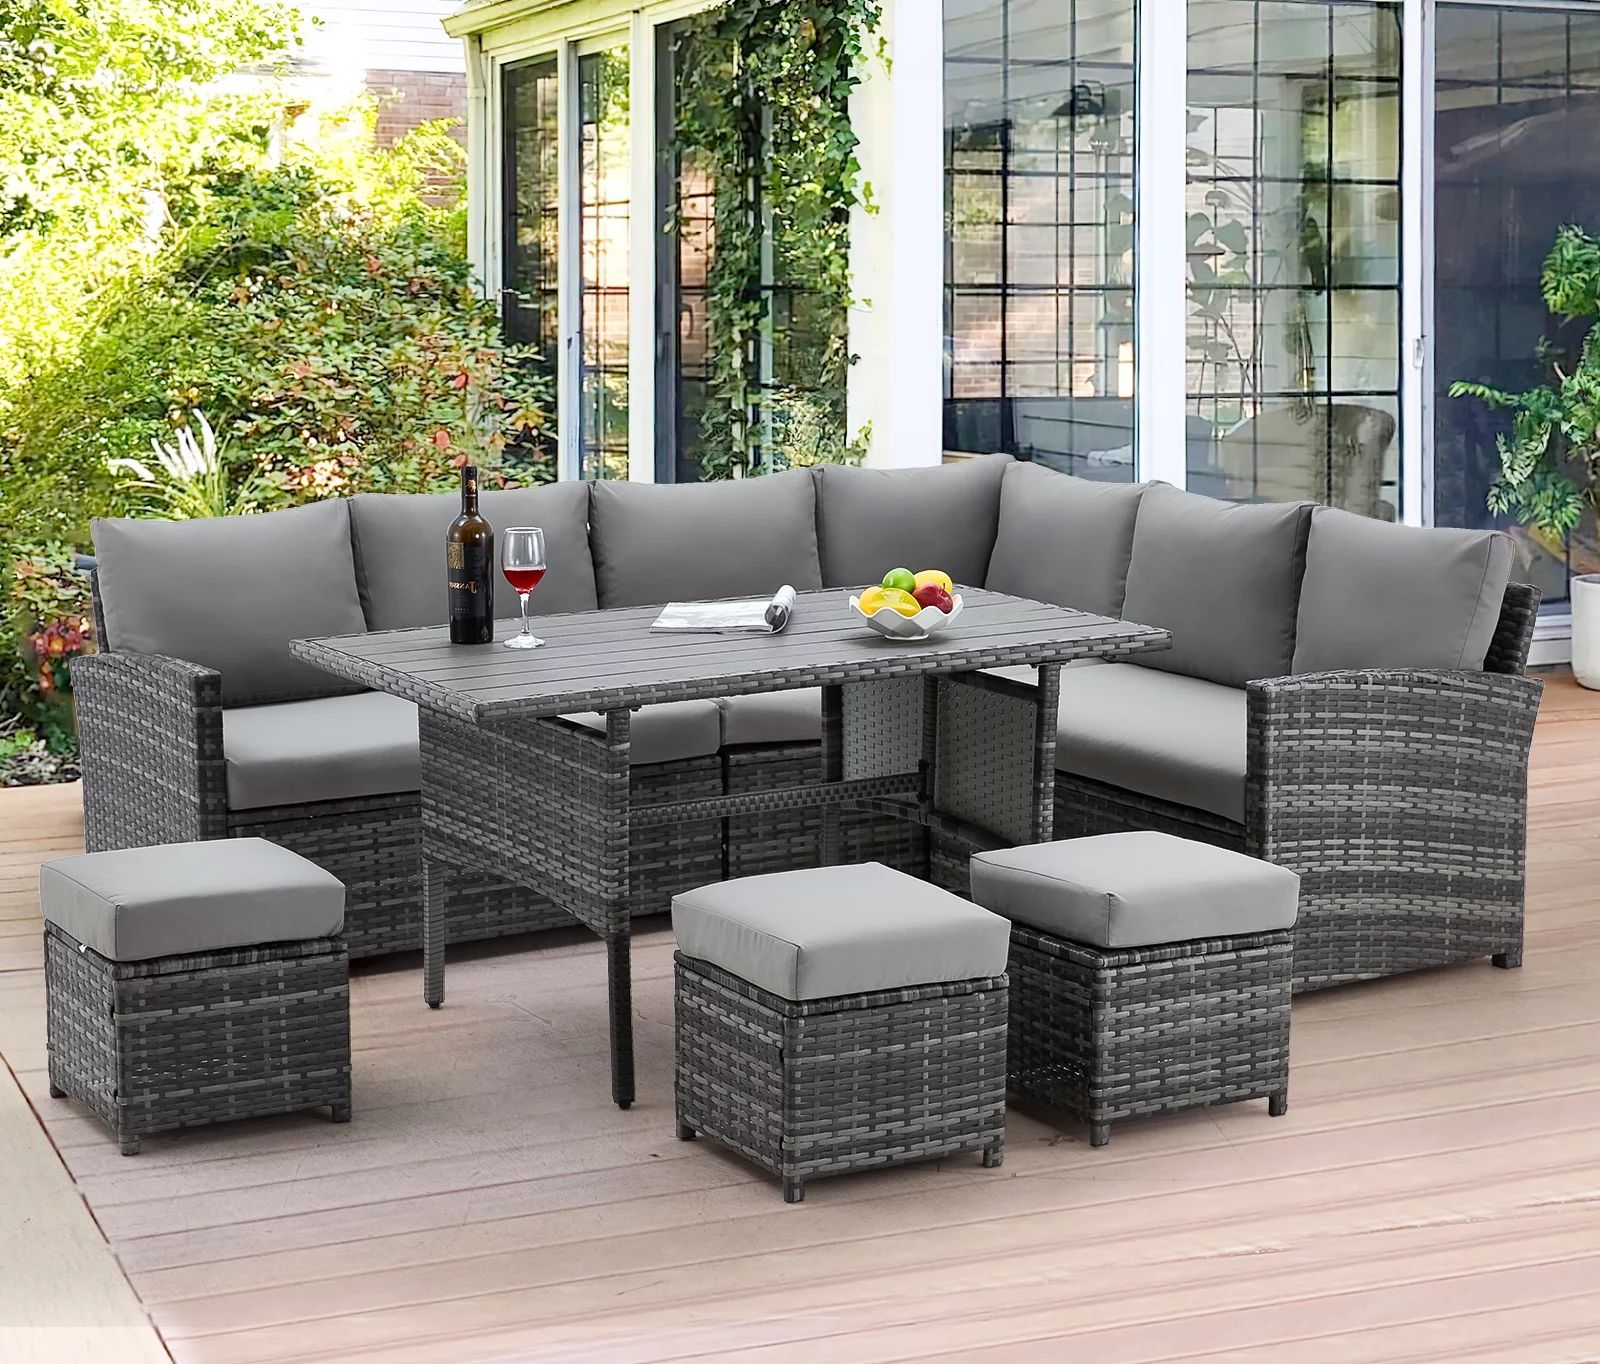 AECOJOY Outdoor Furniture Set, 7-Piece Rattan Wicker Sectional Sofa Couch, Patio Dining Conversat... | Walmart (US)